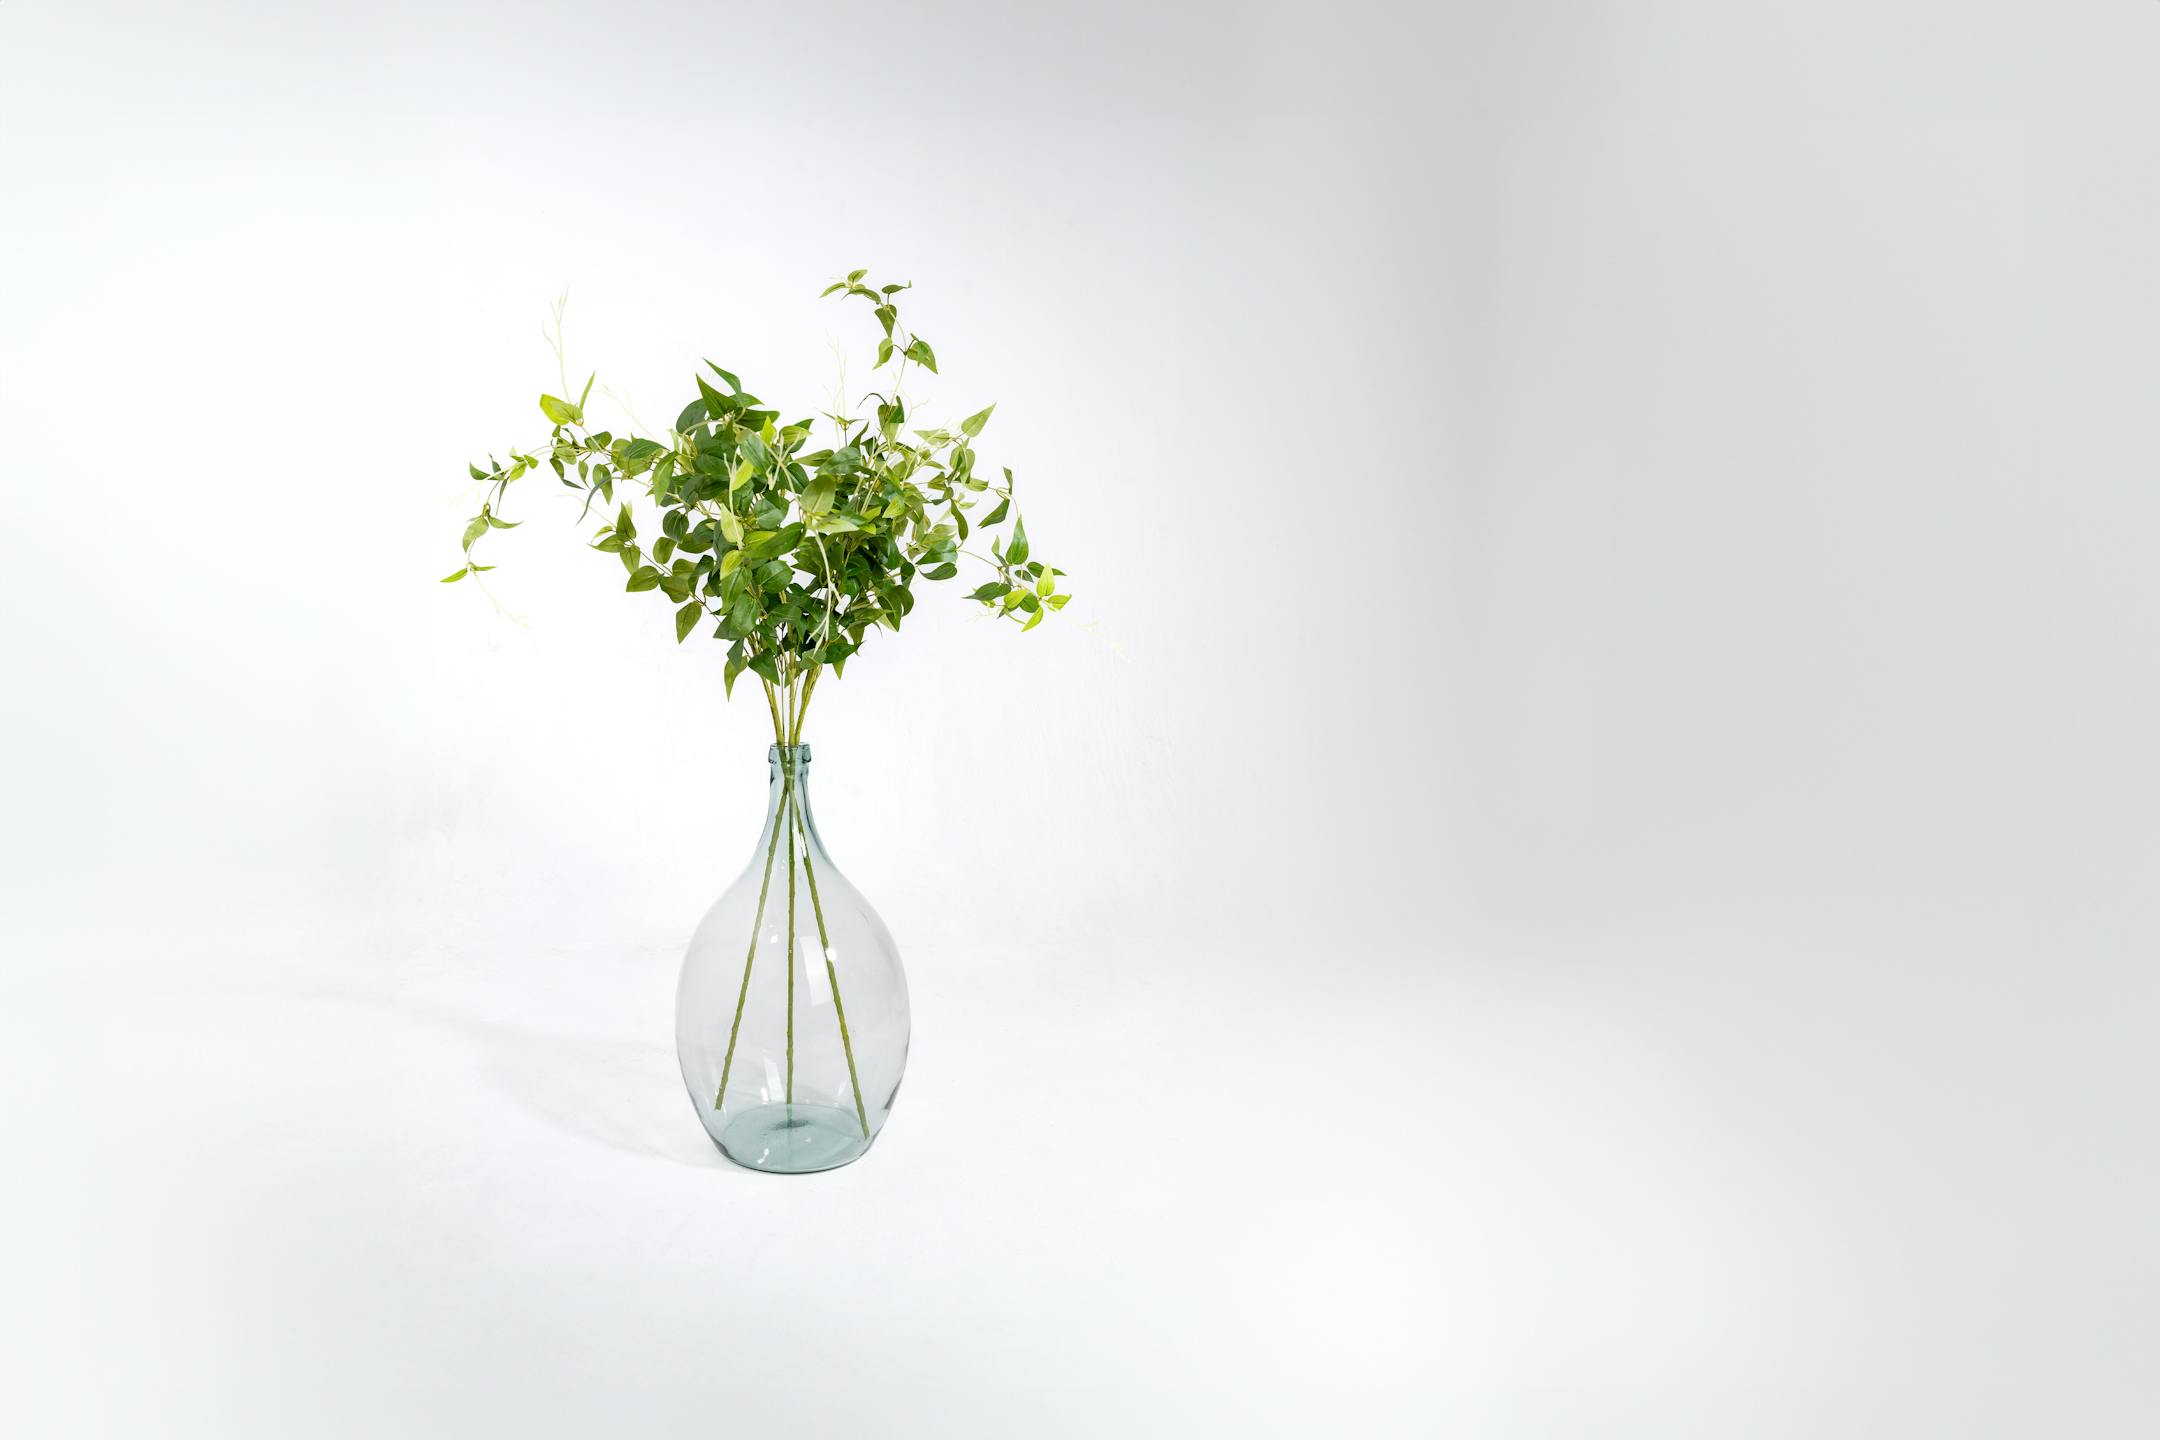 Three artificial clematis sprays in glass vase